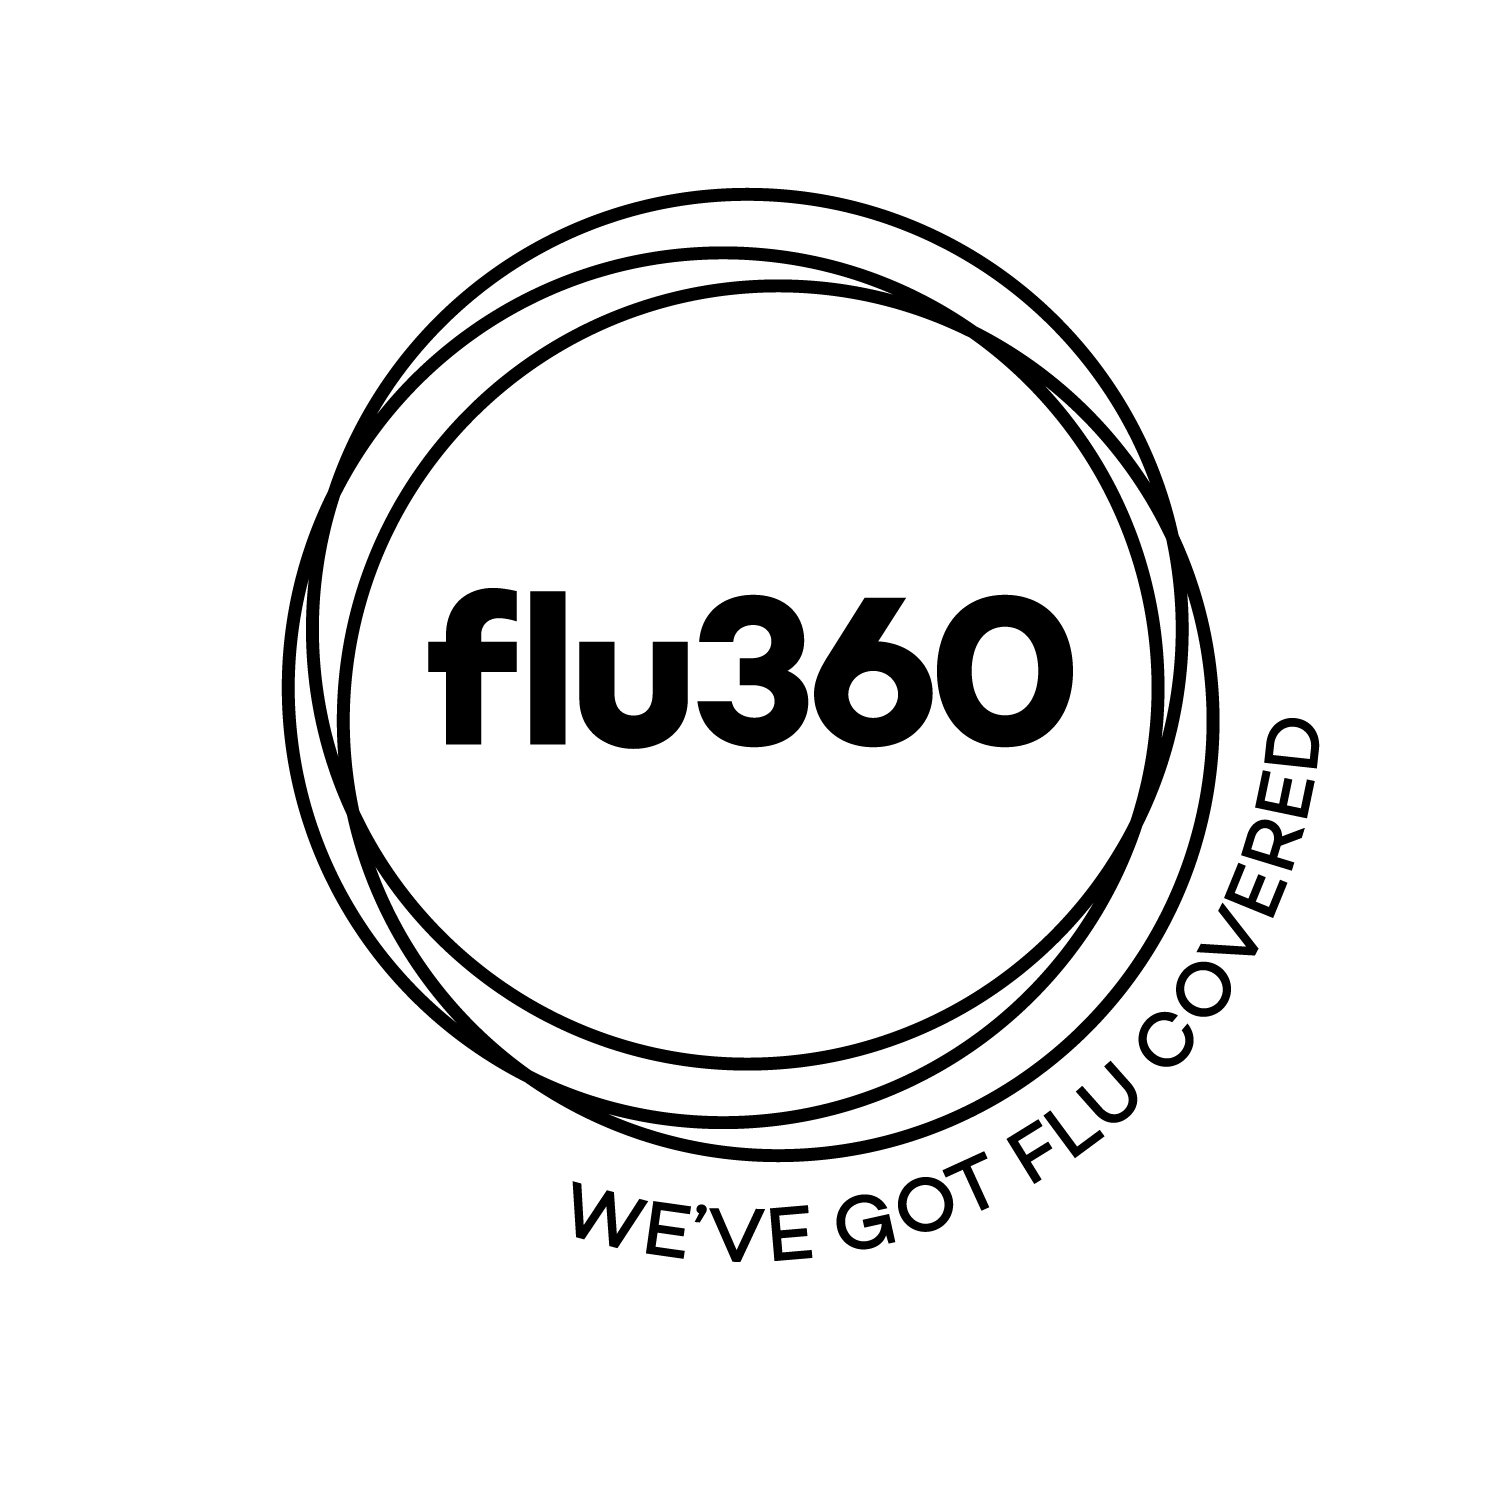  FLU360 WE'VE GOT FLU COVERED